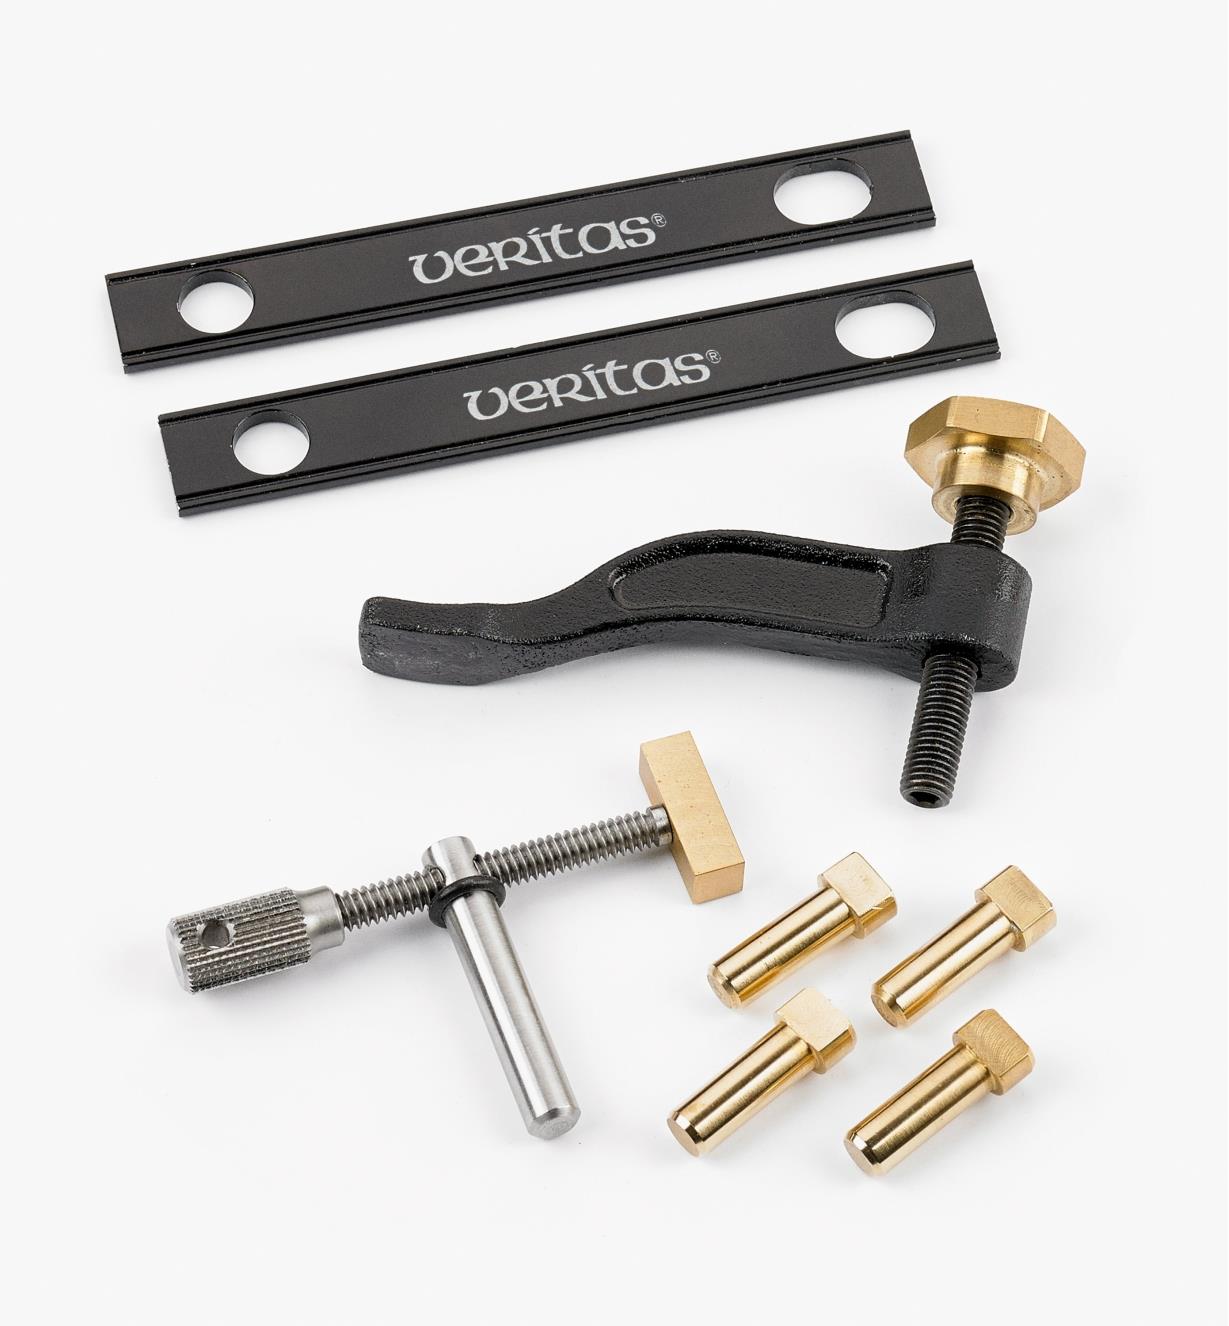 05P8656 - Veritas Miniature Workbench Accessories Set